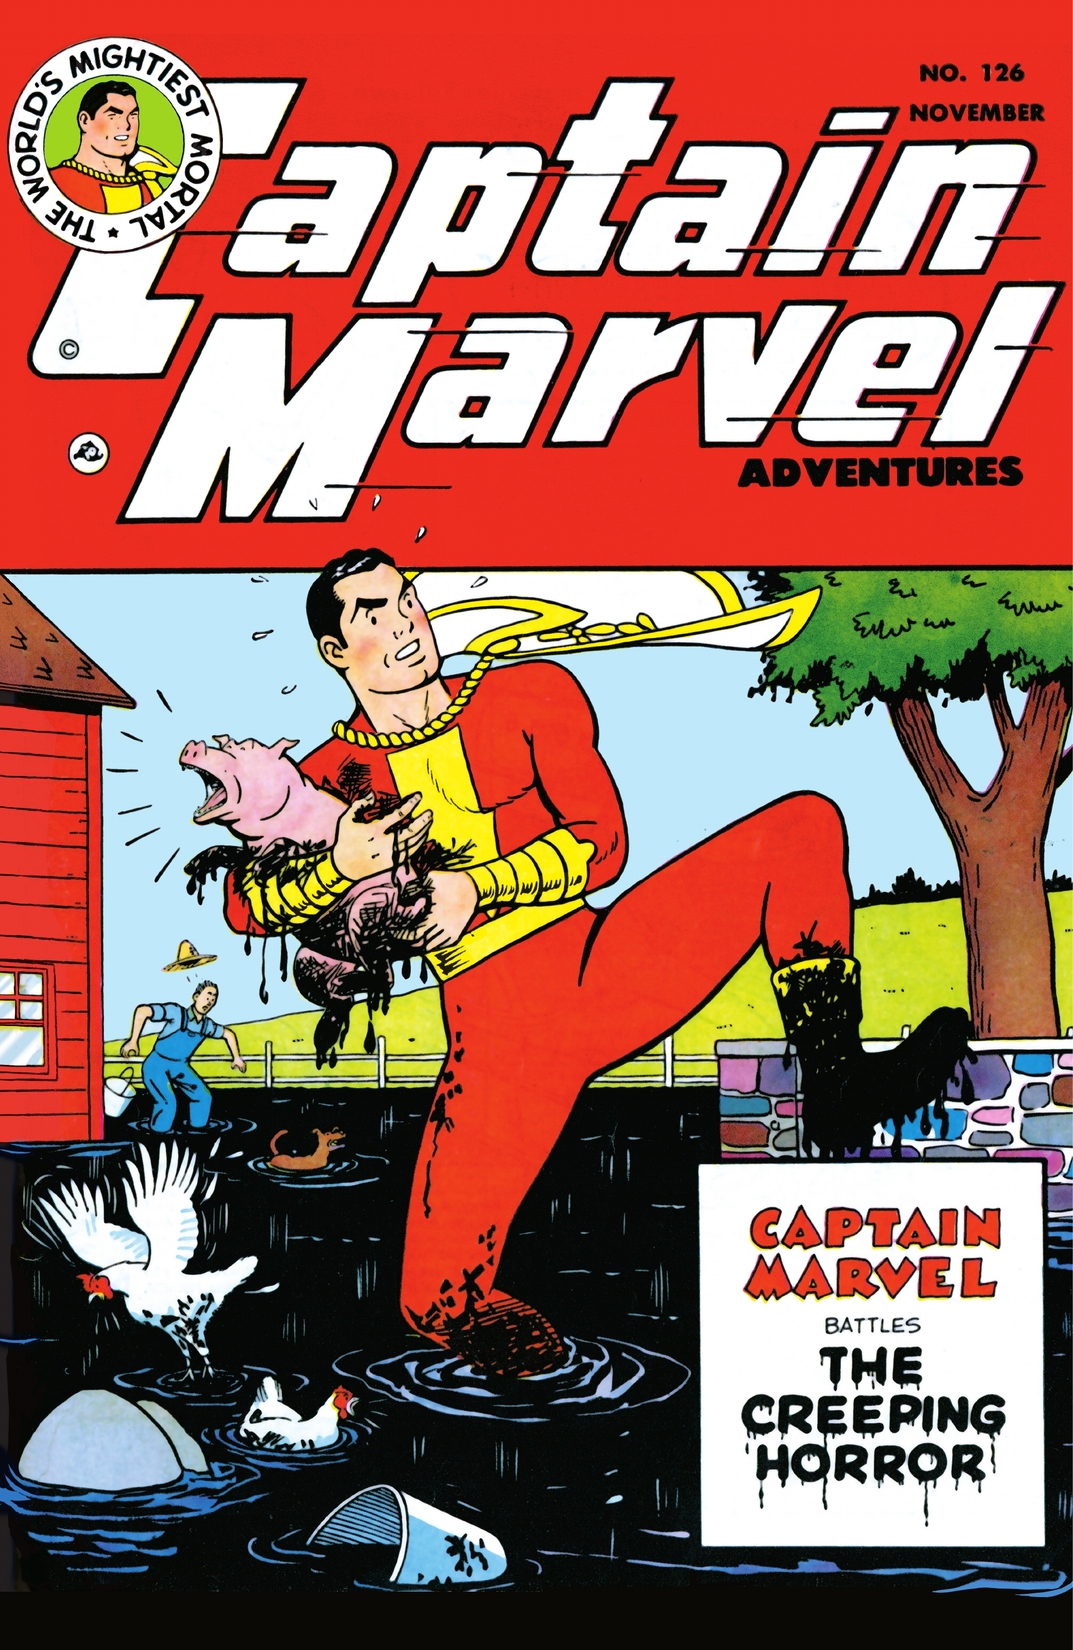 Captain Marvel Adventures #126 preview images